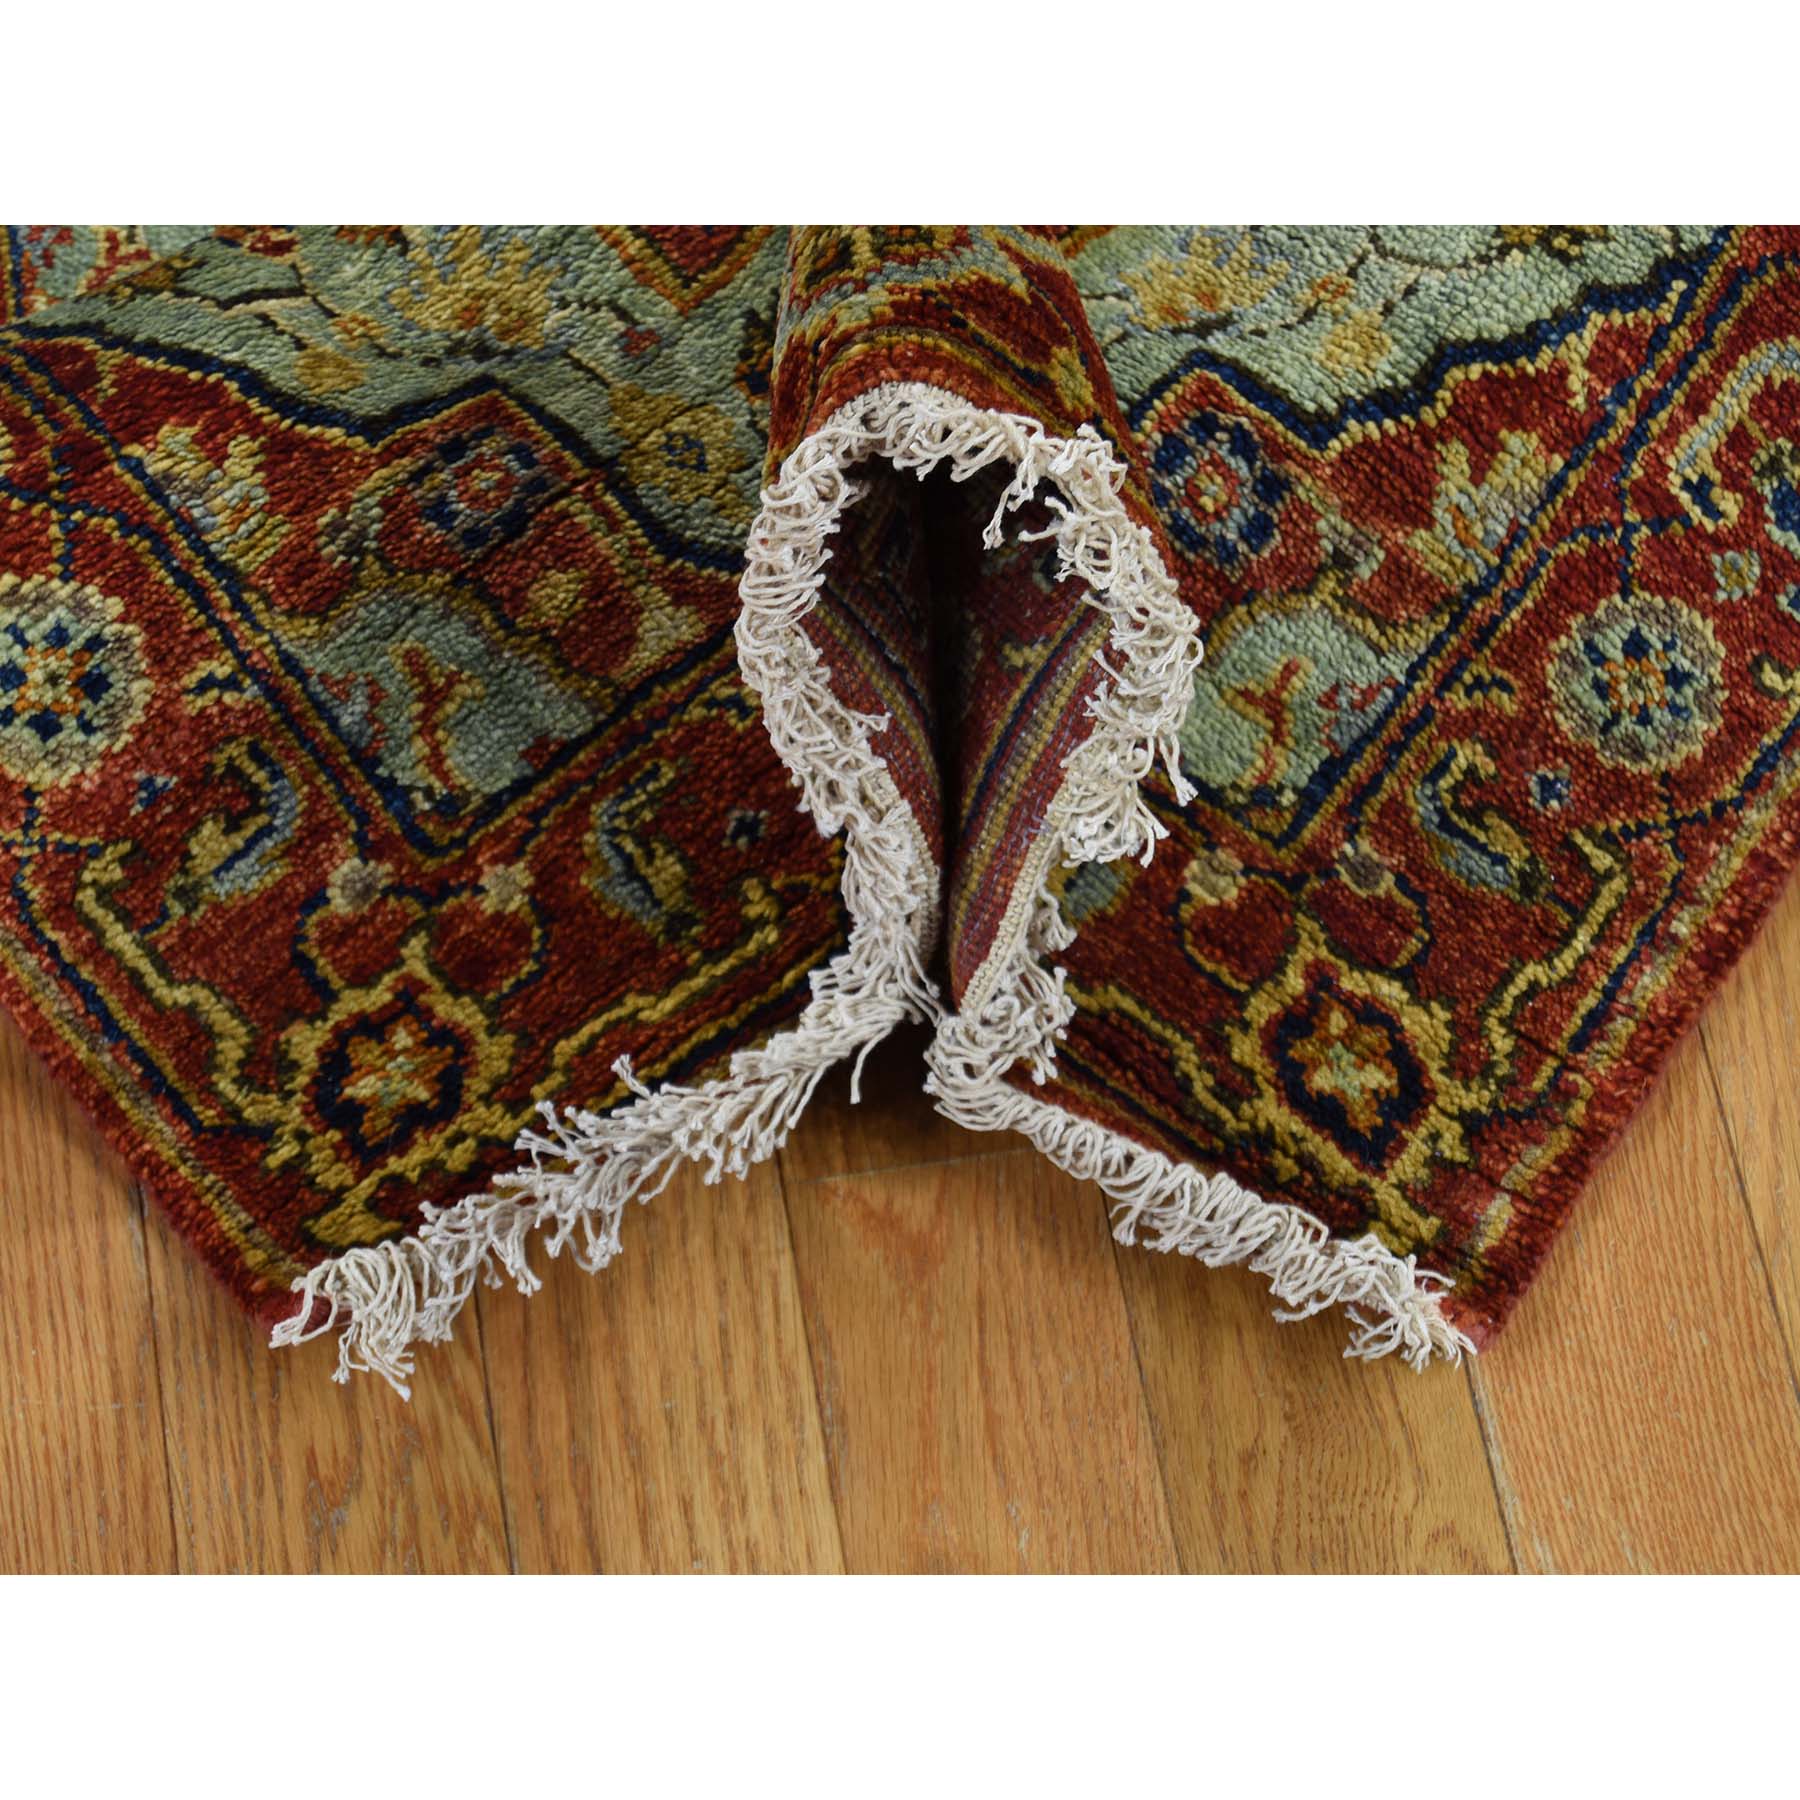 2'7"x17'7" Antiqued Heriz Pure Wool XL Runner Hand Woven Oriental Rug 